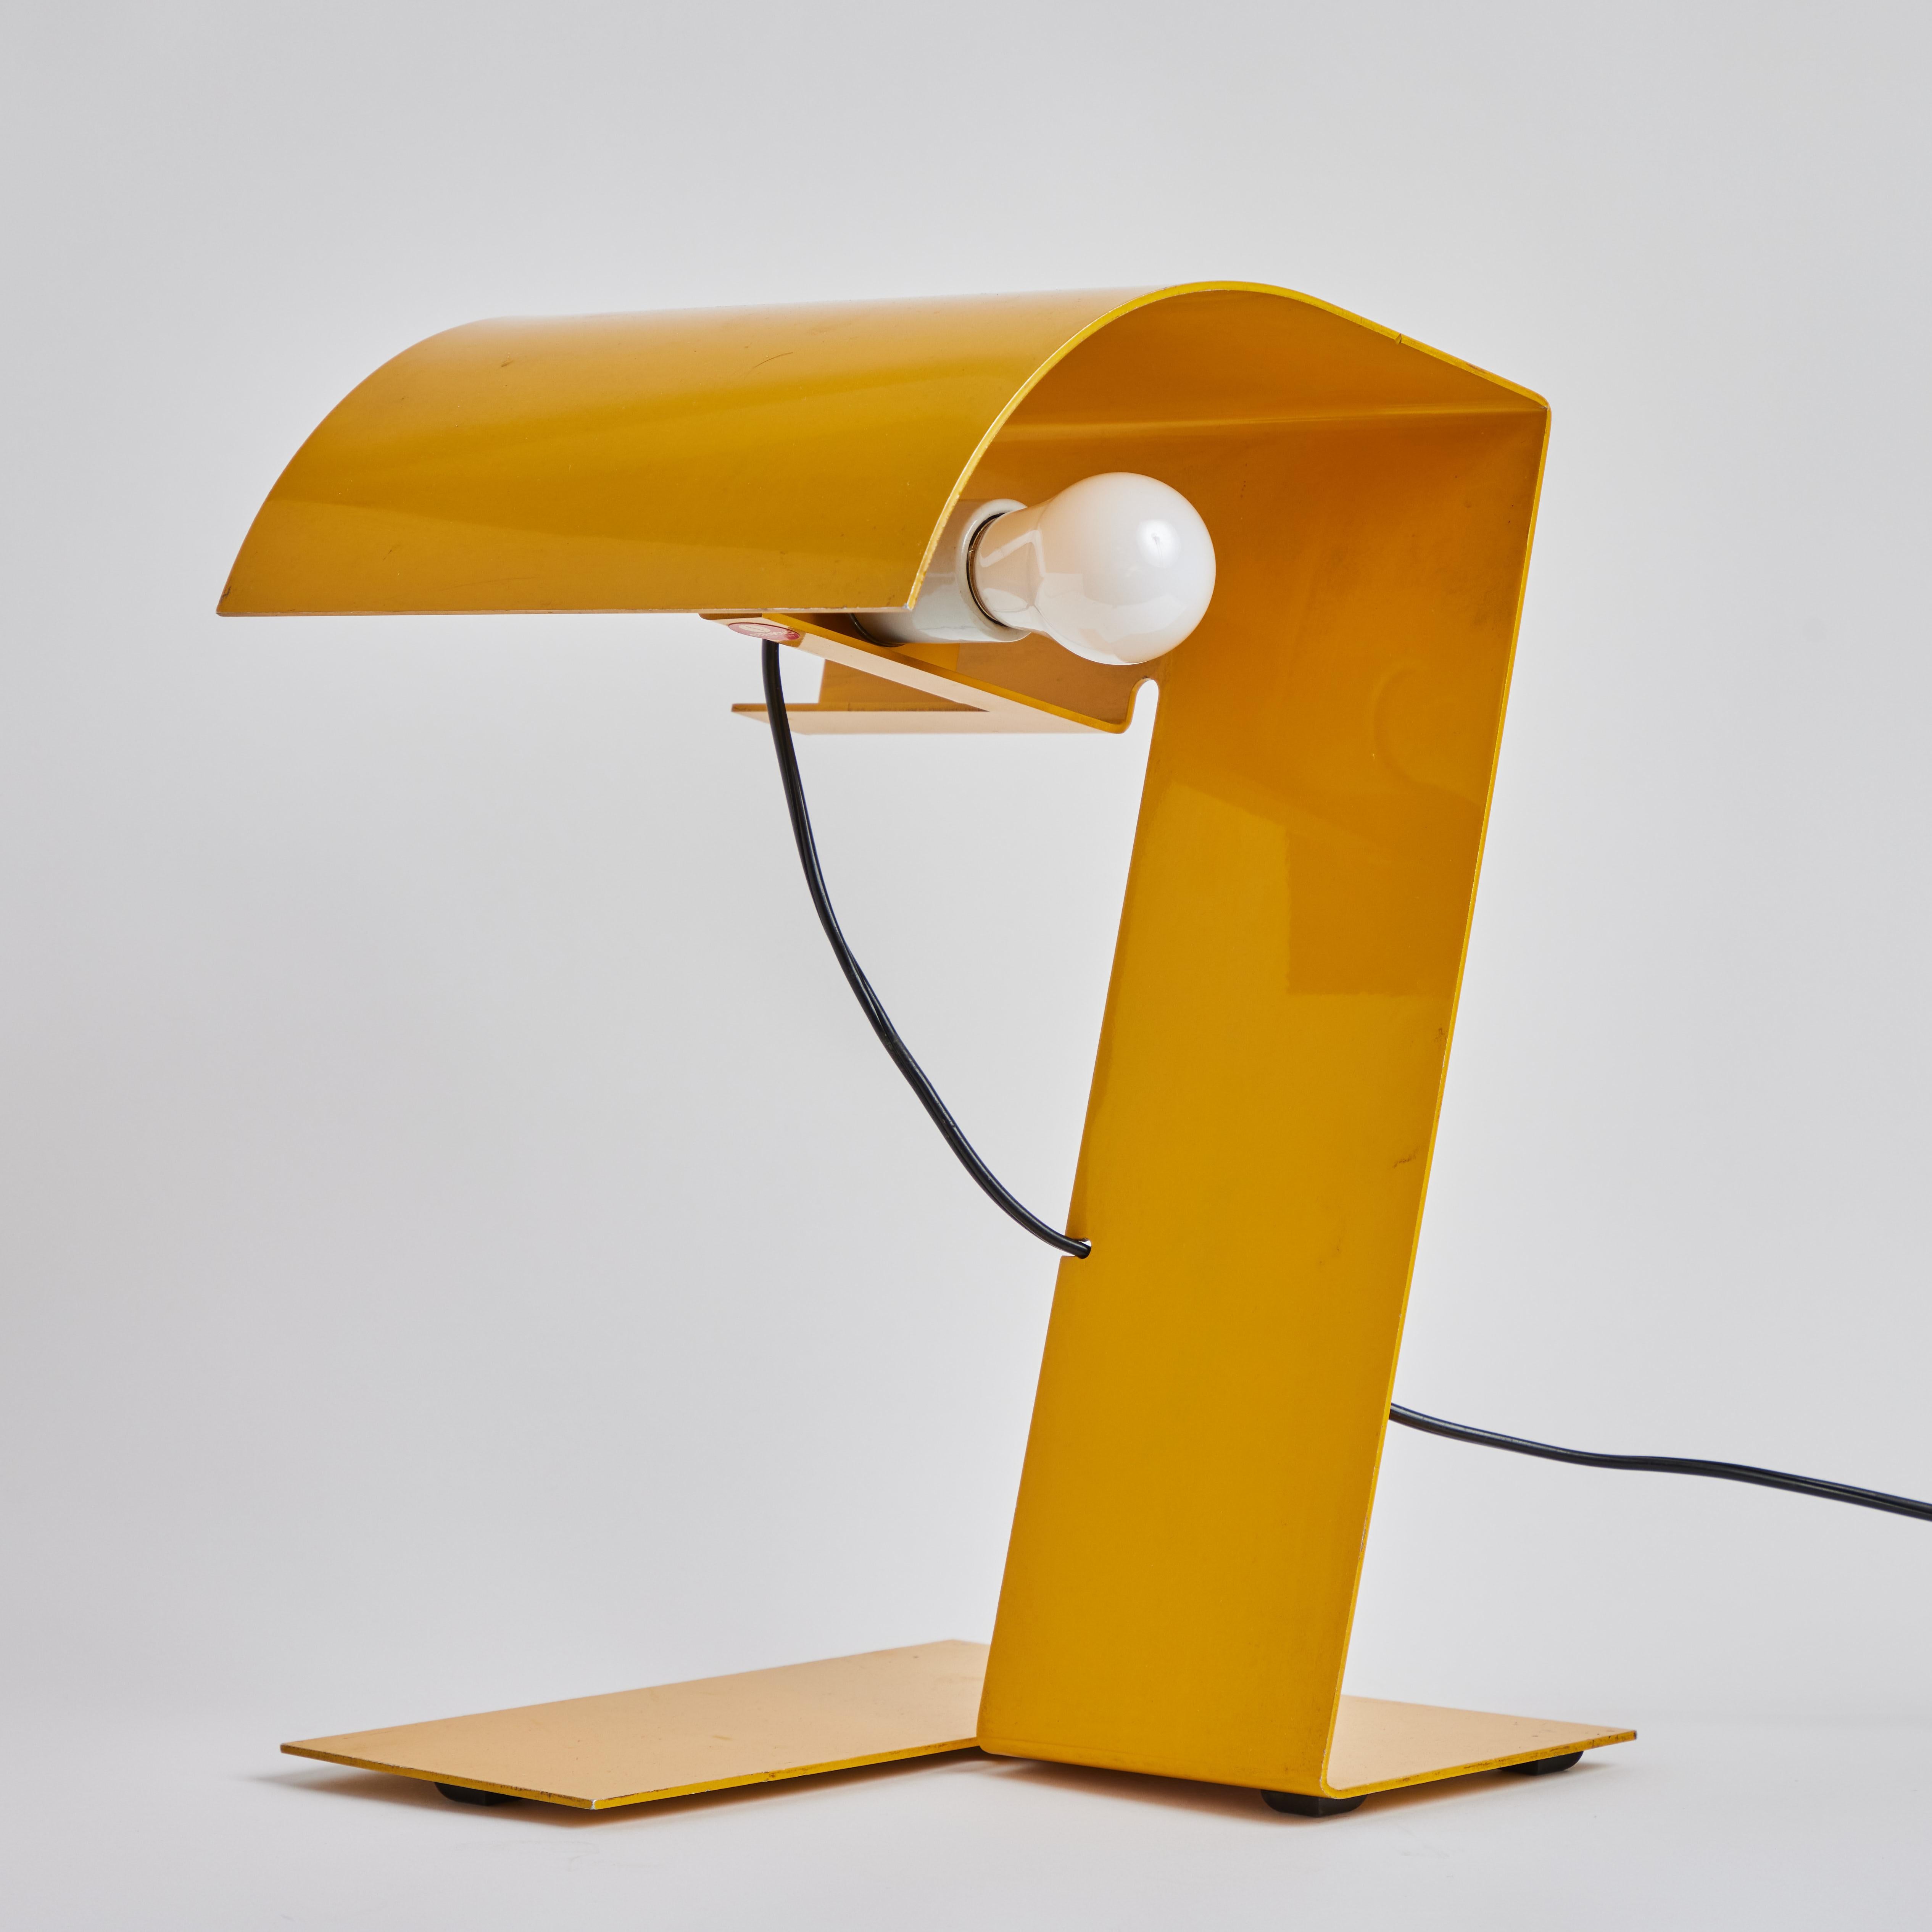 1972 Stilnovo 'Blitz' Table Lamp in Yellow by Trabucco, Vecchi & Volpi For Sale 3